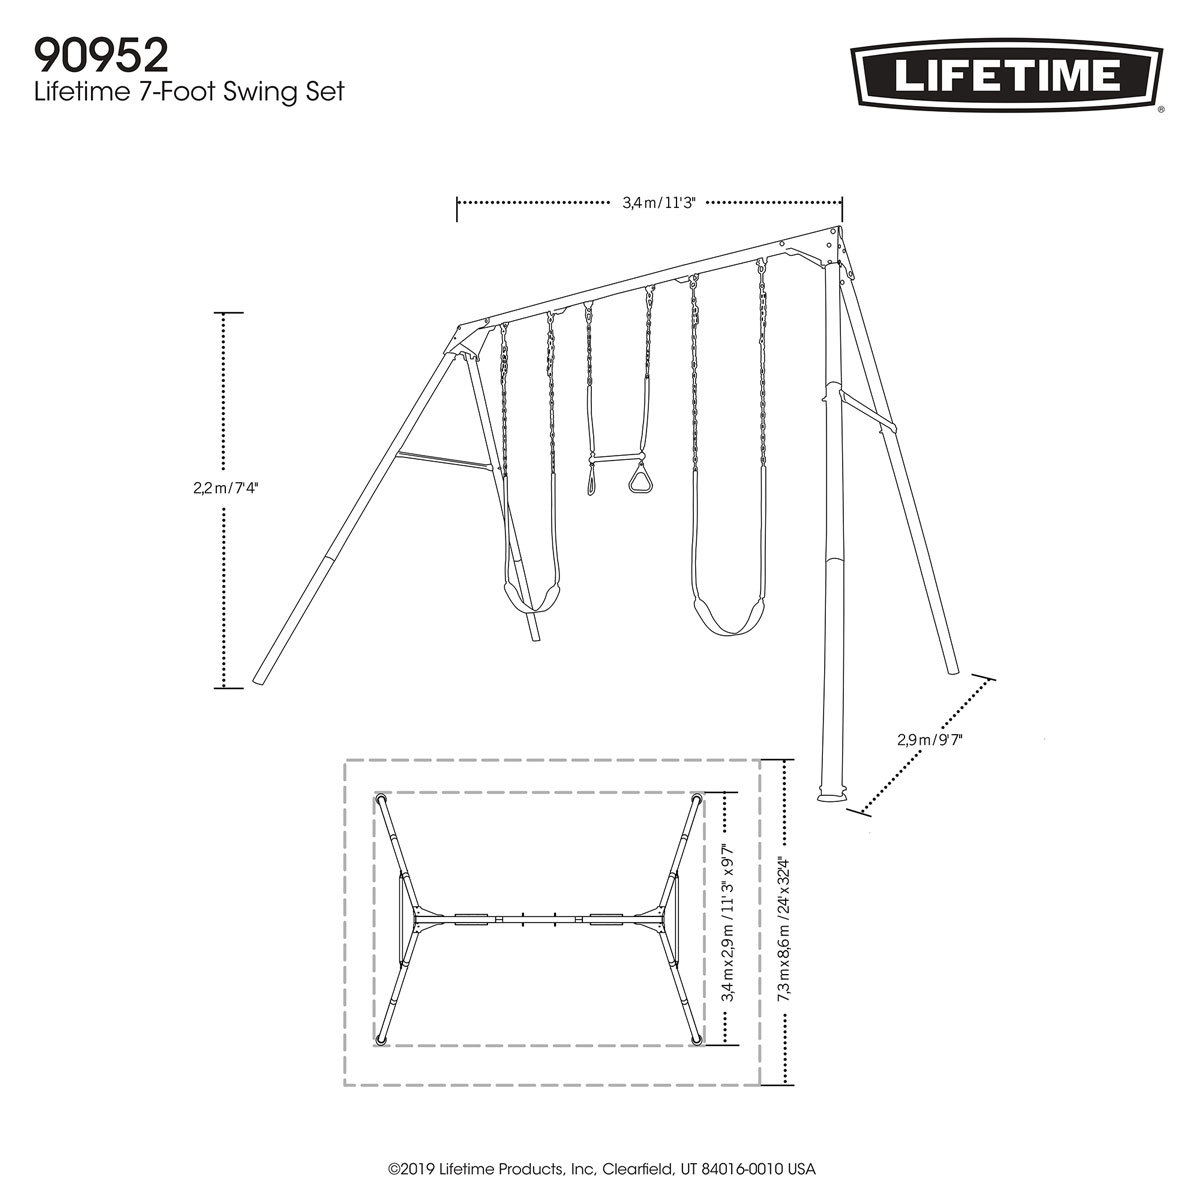 Lifetime swing set line drawings